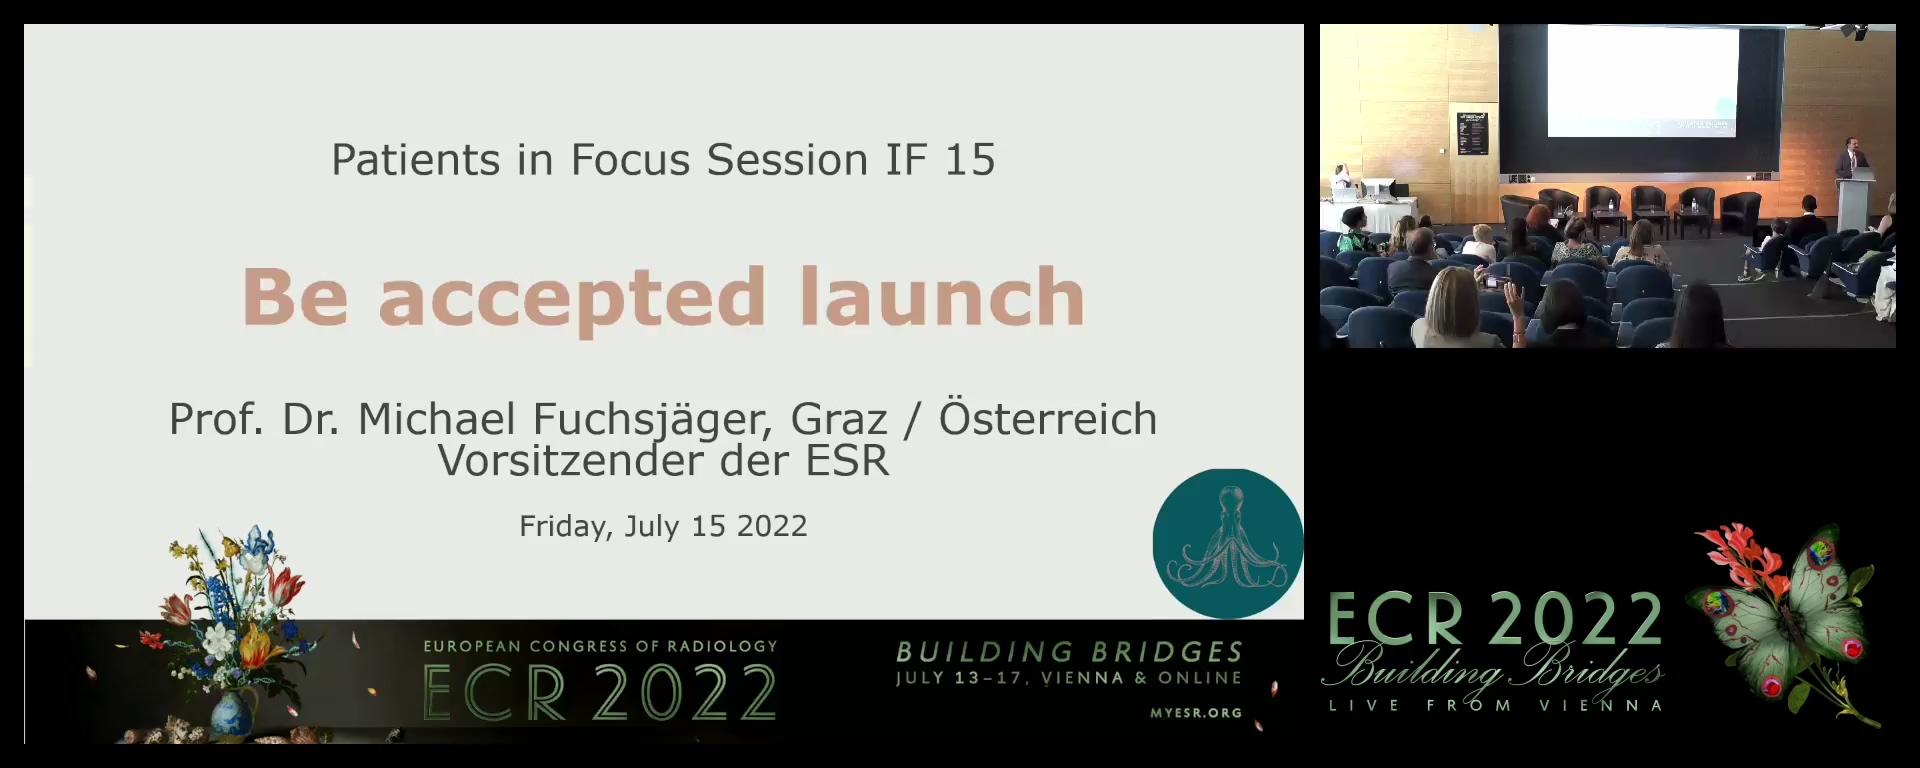 Introduction by the moderator - Michael H. Fuchsjäger, Graz / AT